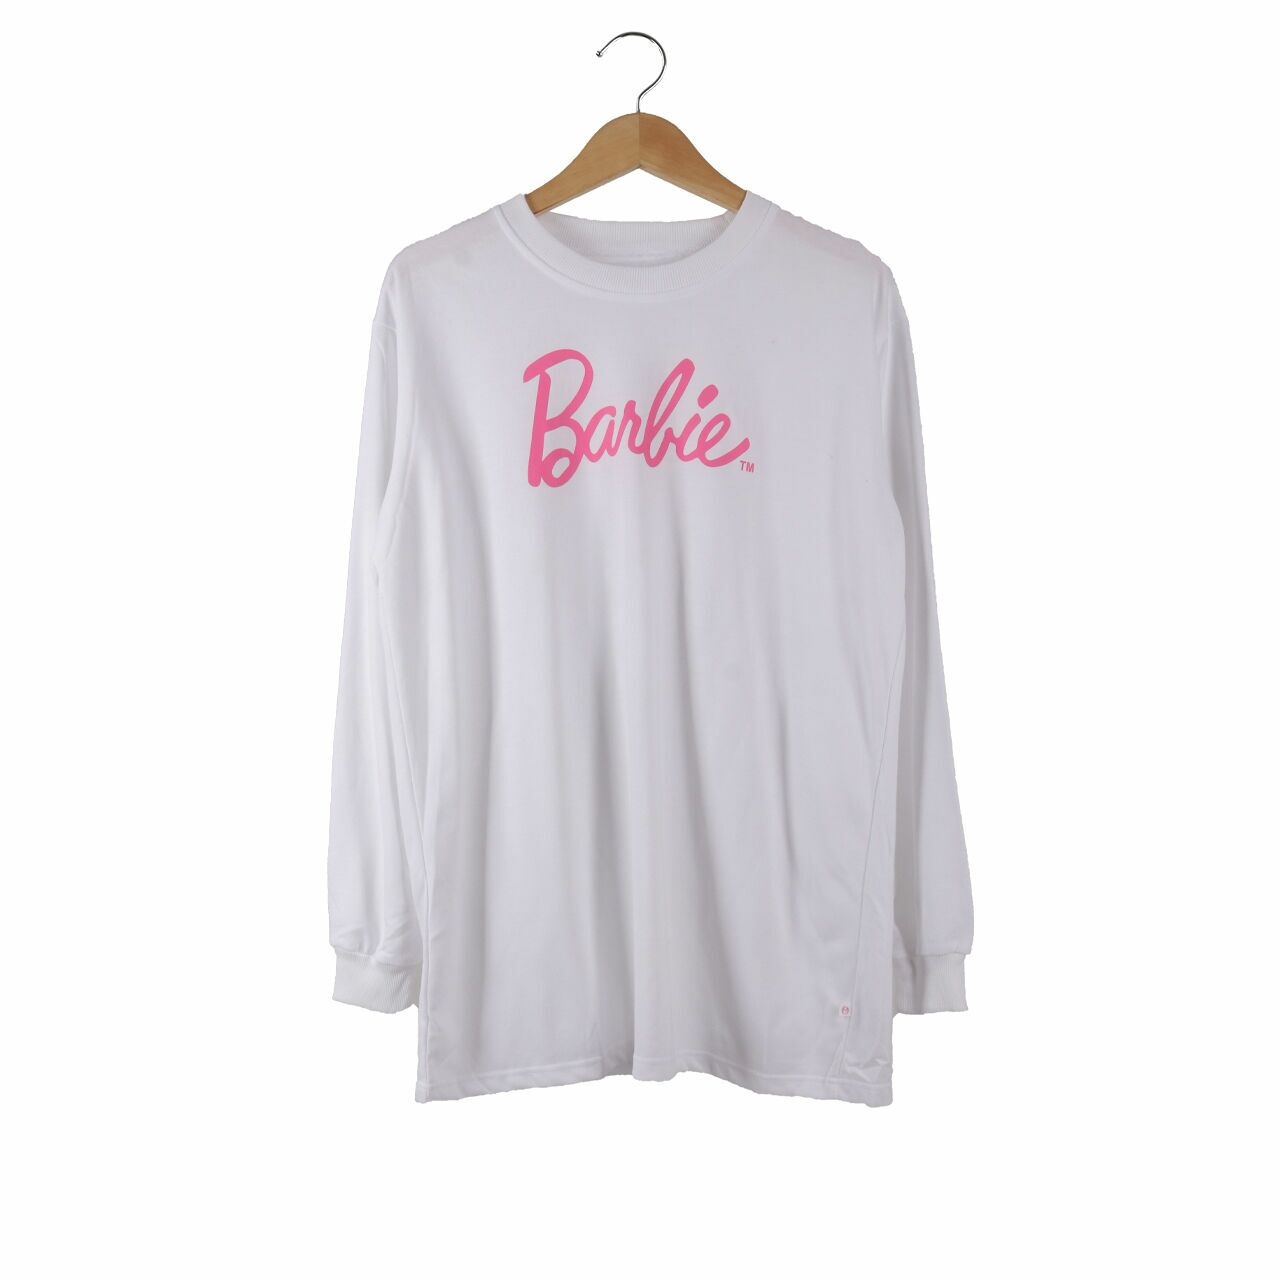 Barbie x M by Mischa White T-Shirt